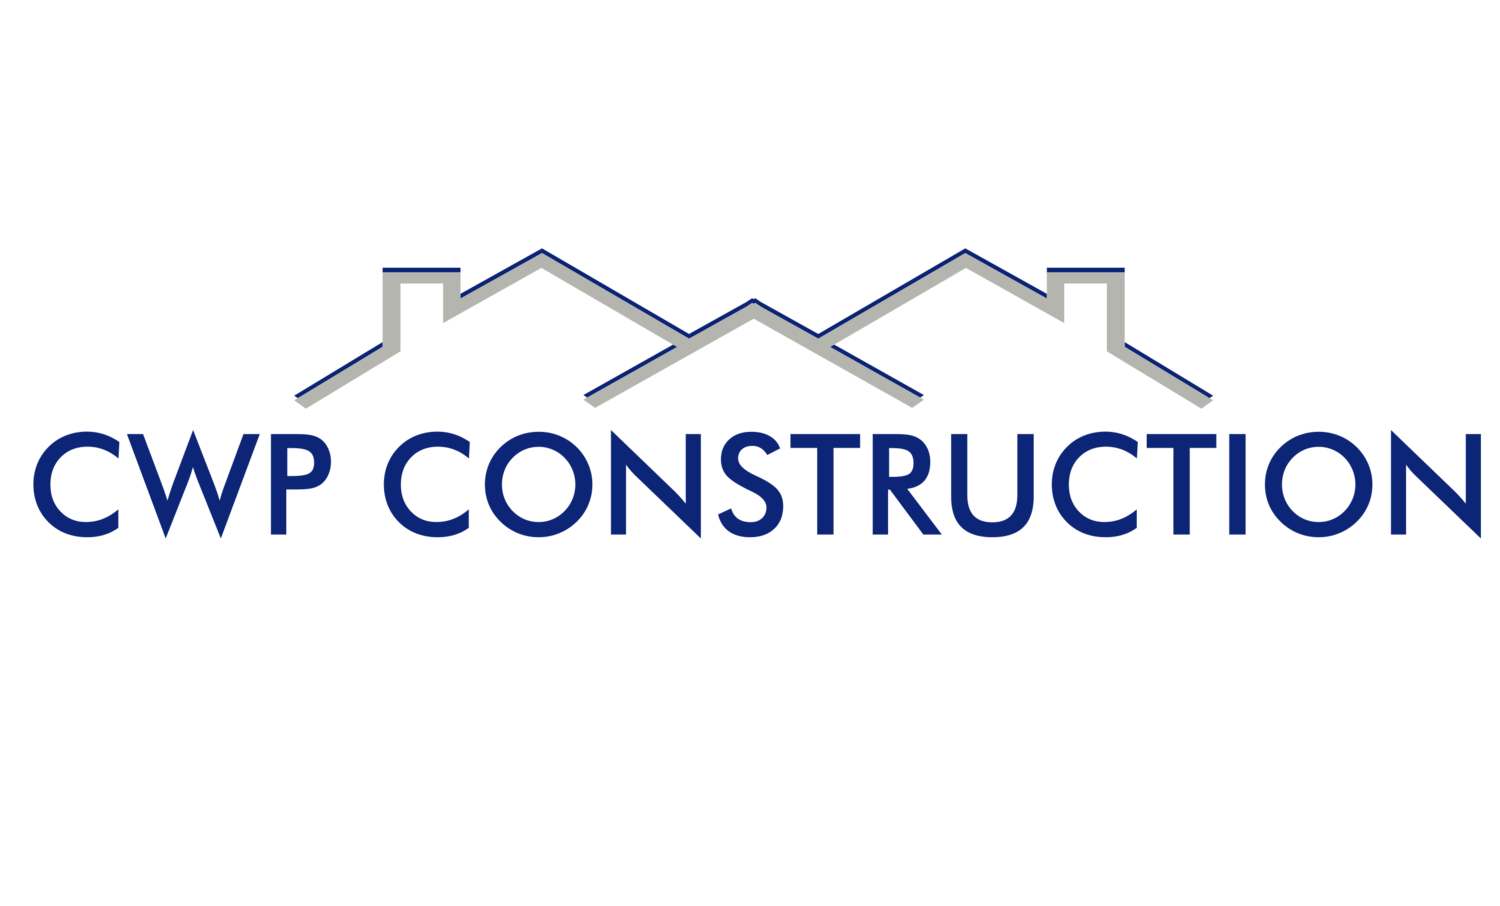 CWP CONSTRUCTION